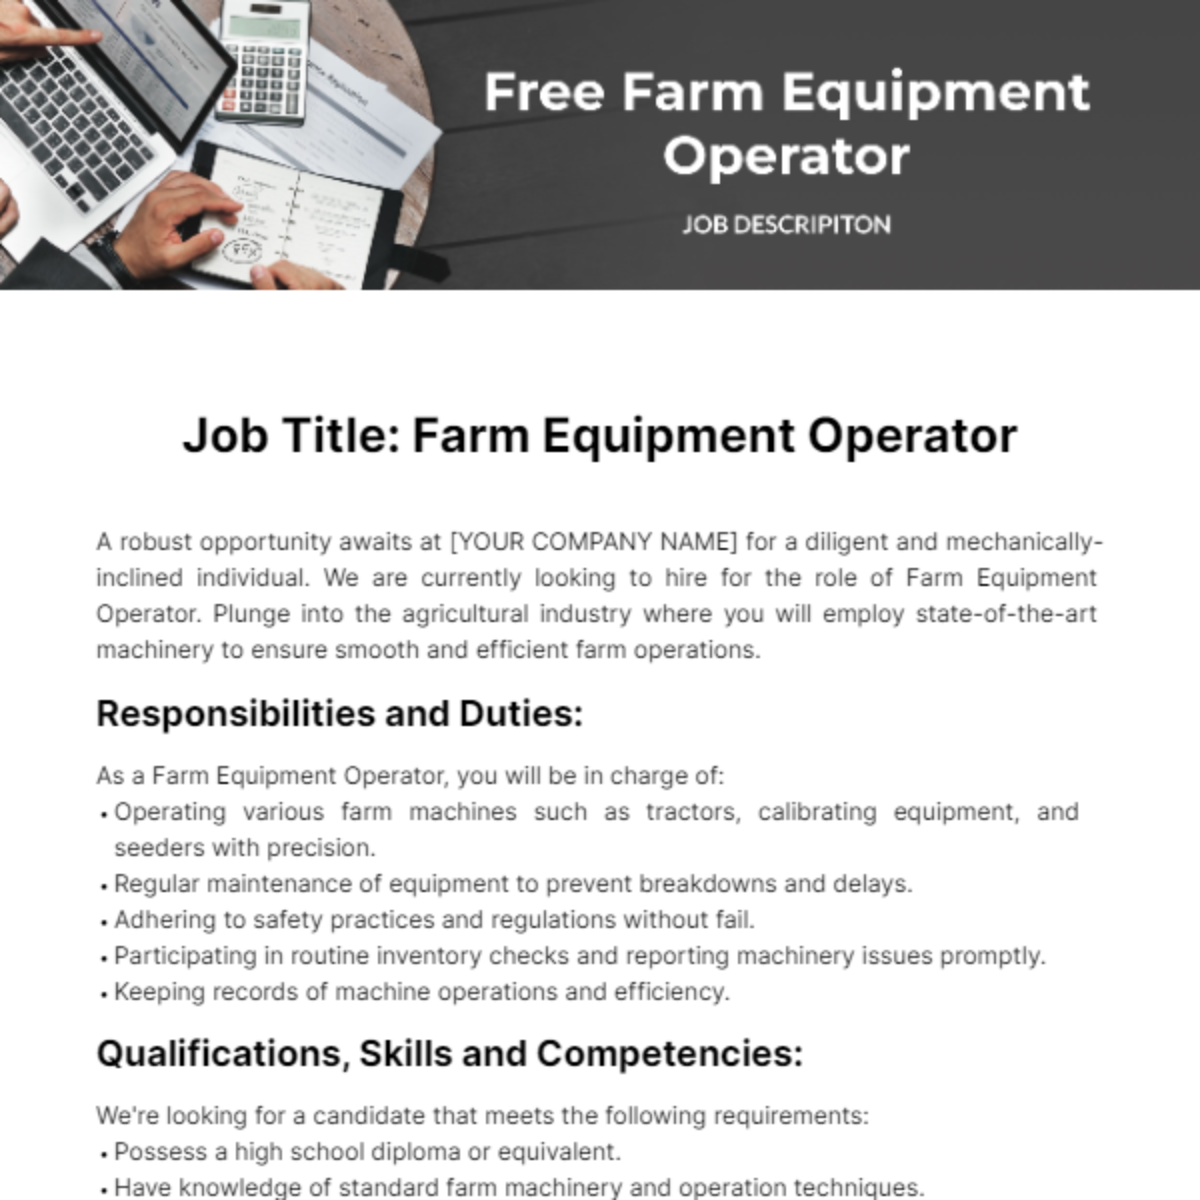 Free Farm Equipment Operator Job Description Template